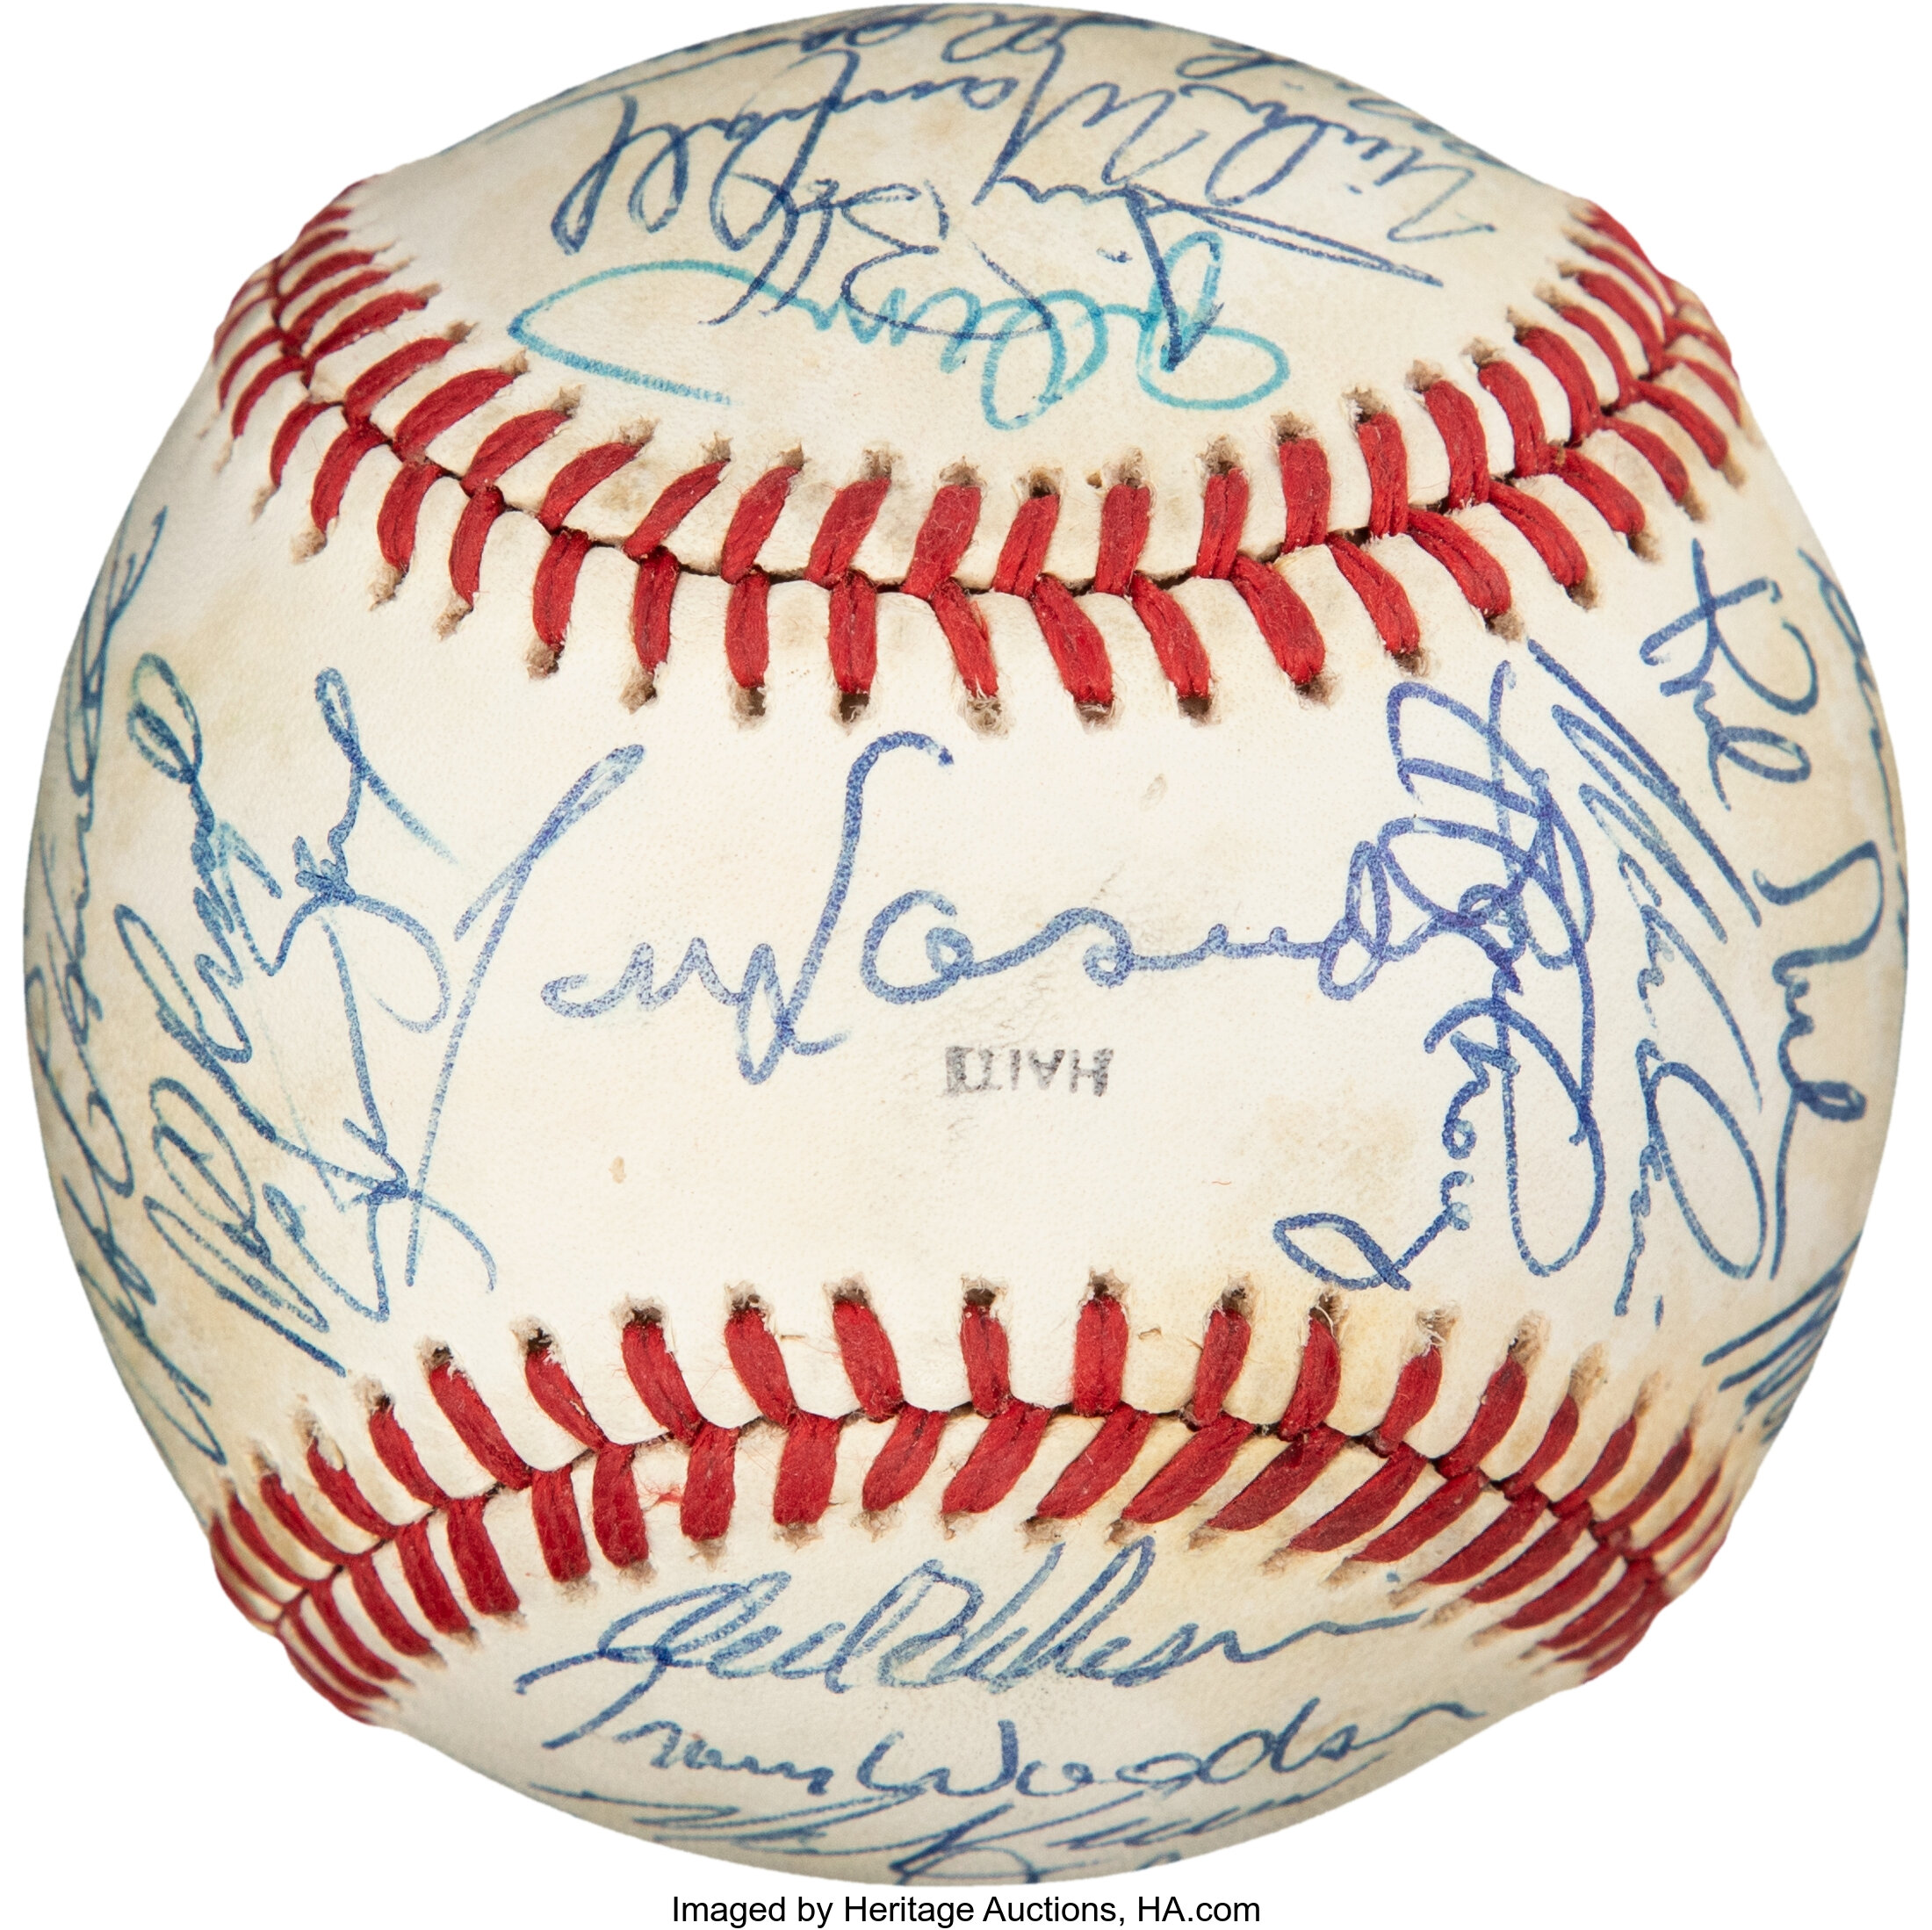 Tom Lasorda & Kirk Gibson Autographed Official 1988 World Series Baseball